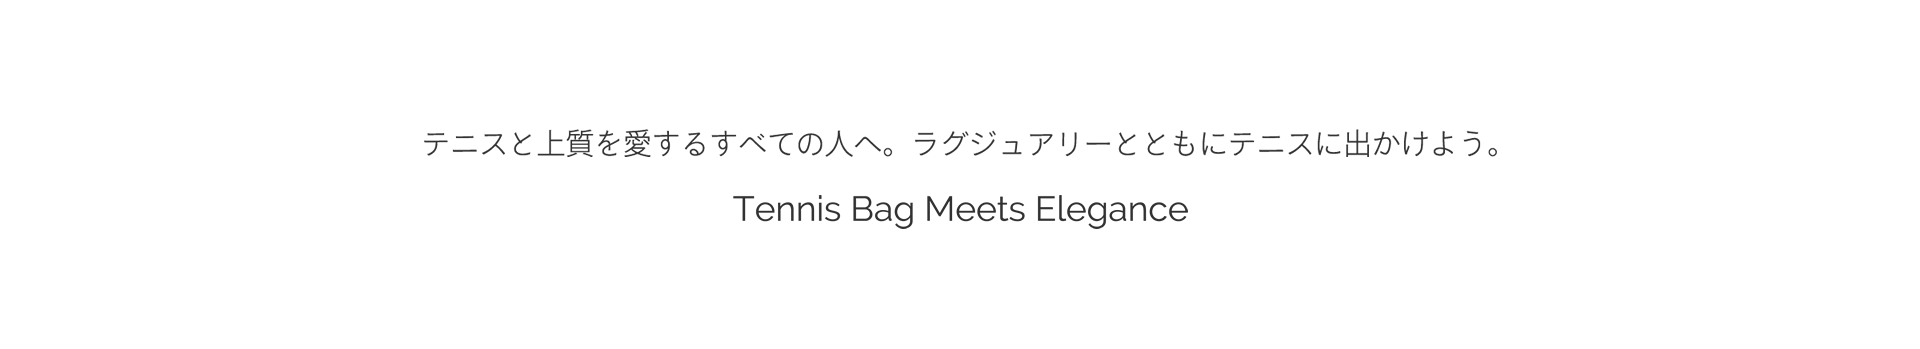 Tennis-Bag-Meets-Elegance　テニスと上質を愛する全ての人へ　ラグジュアリーとともにテニスに出かけよう